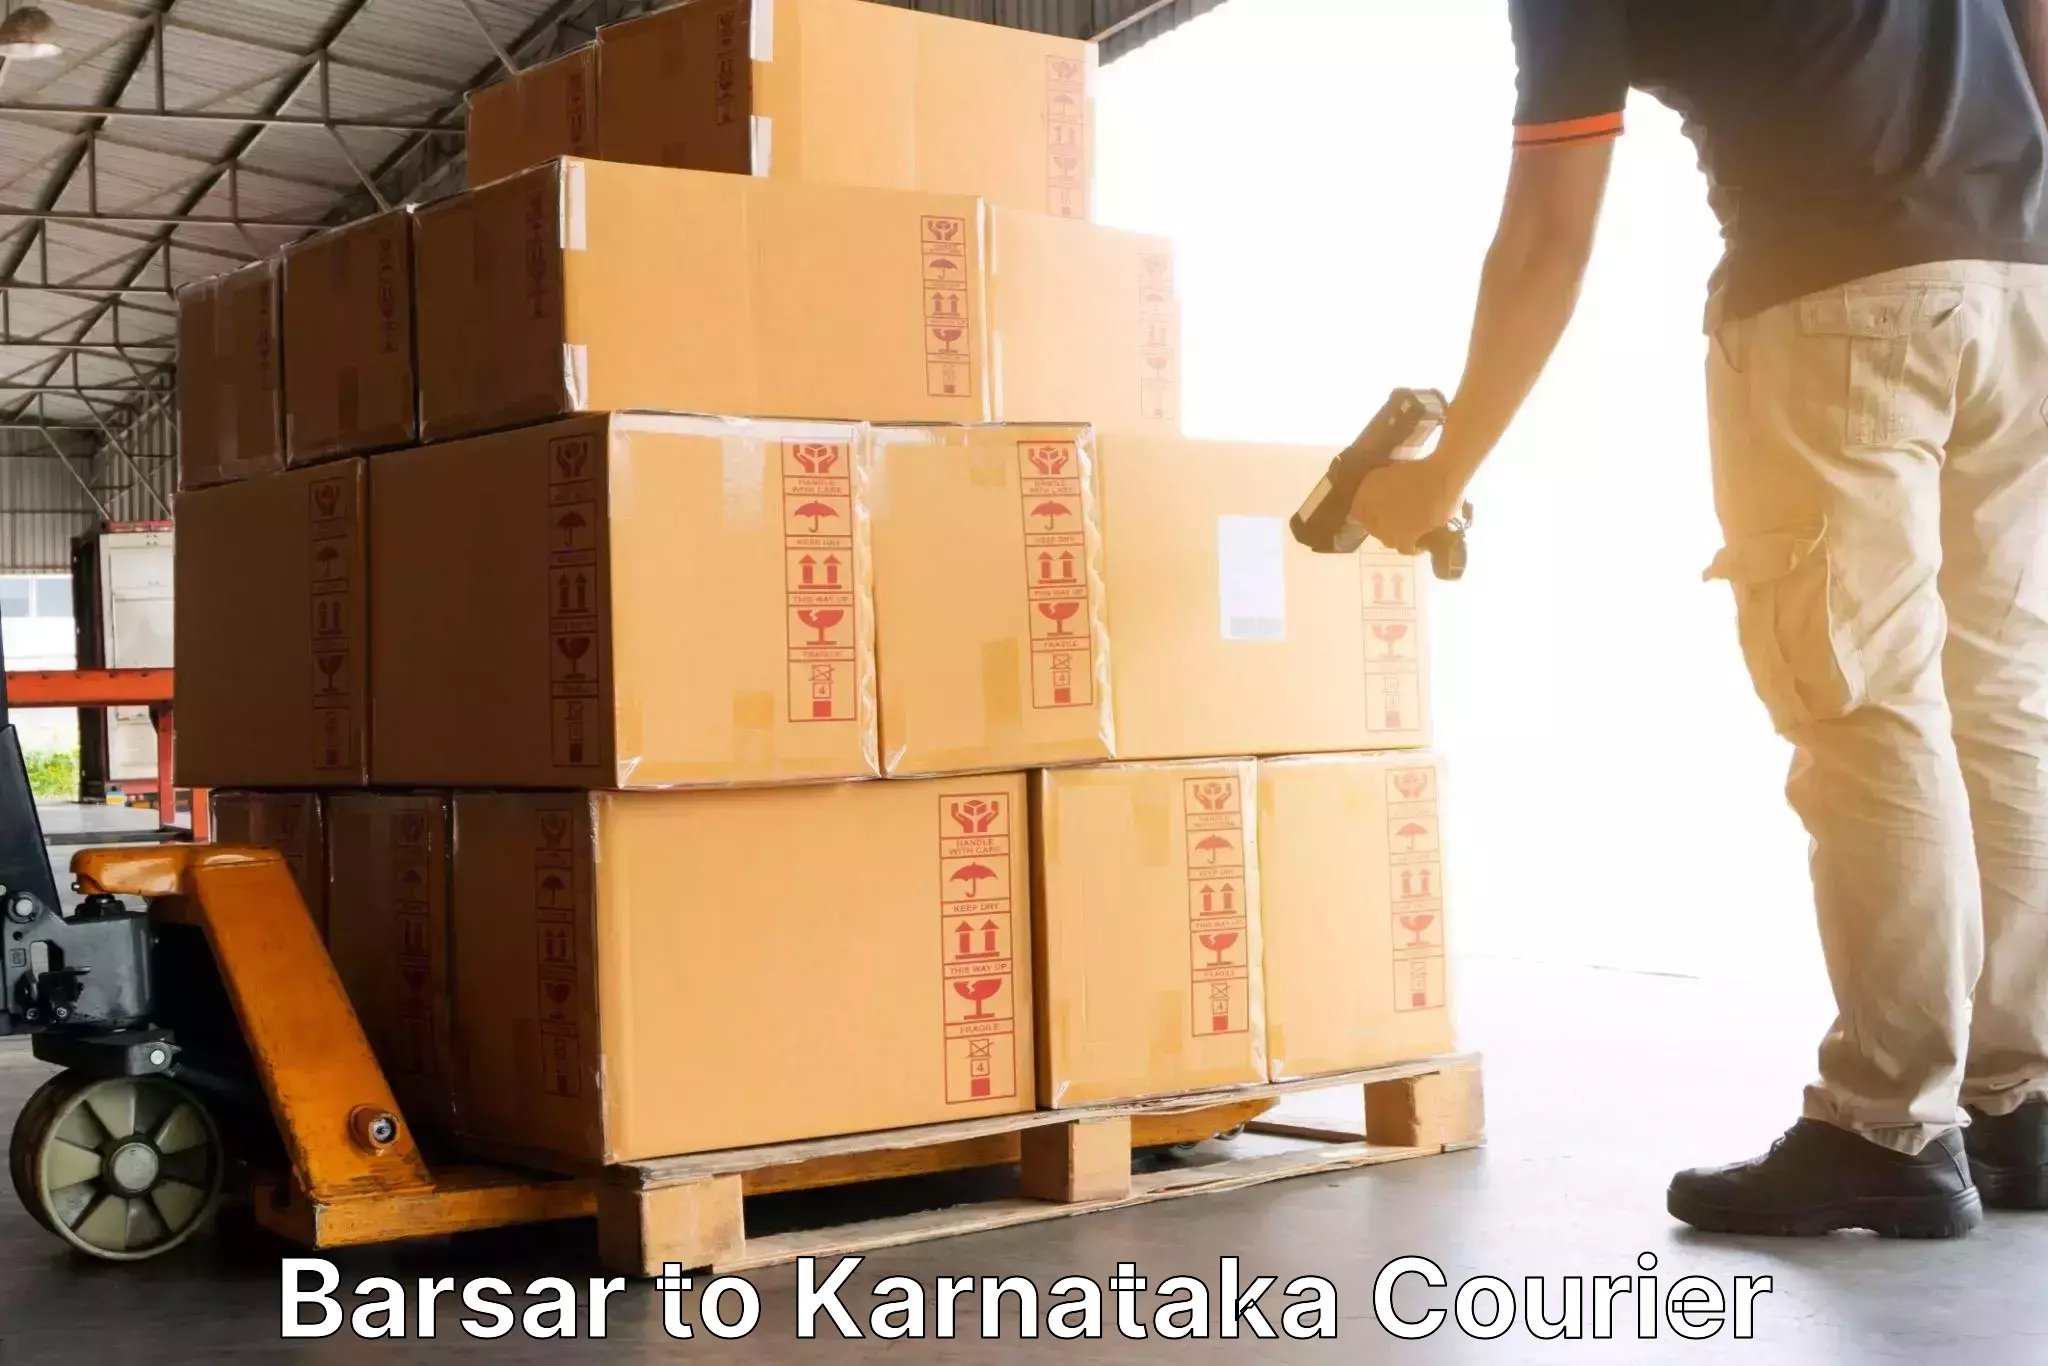 Courier service comparison Barsar to Yenepoya Mangalore